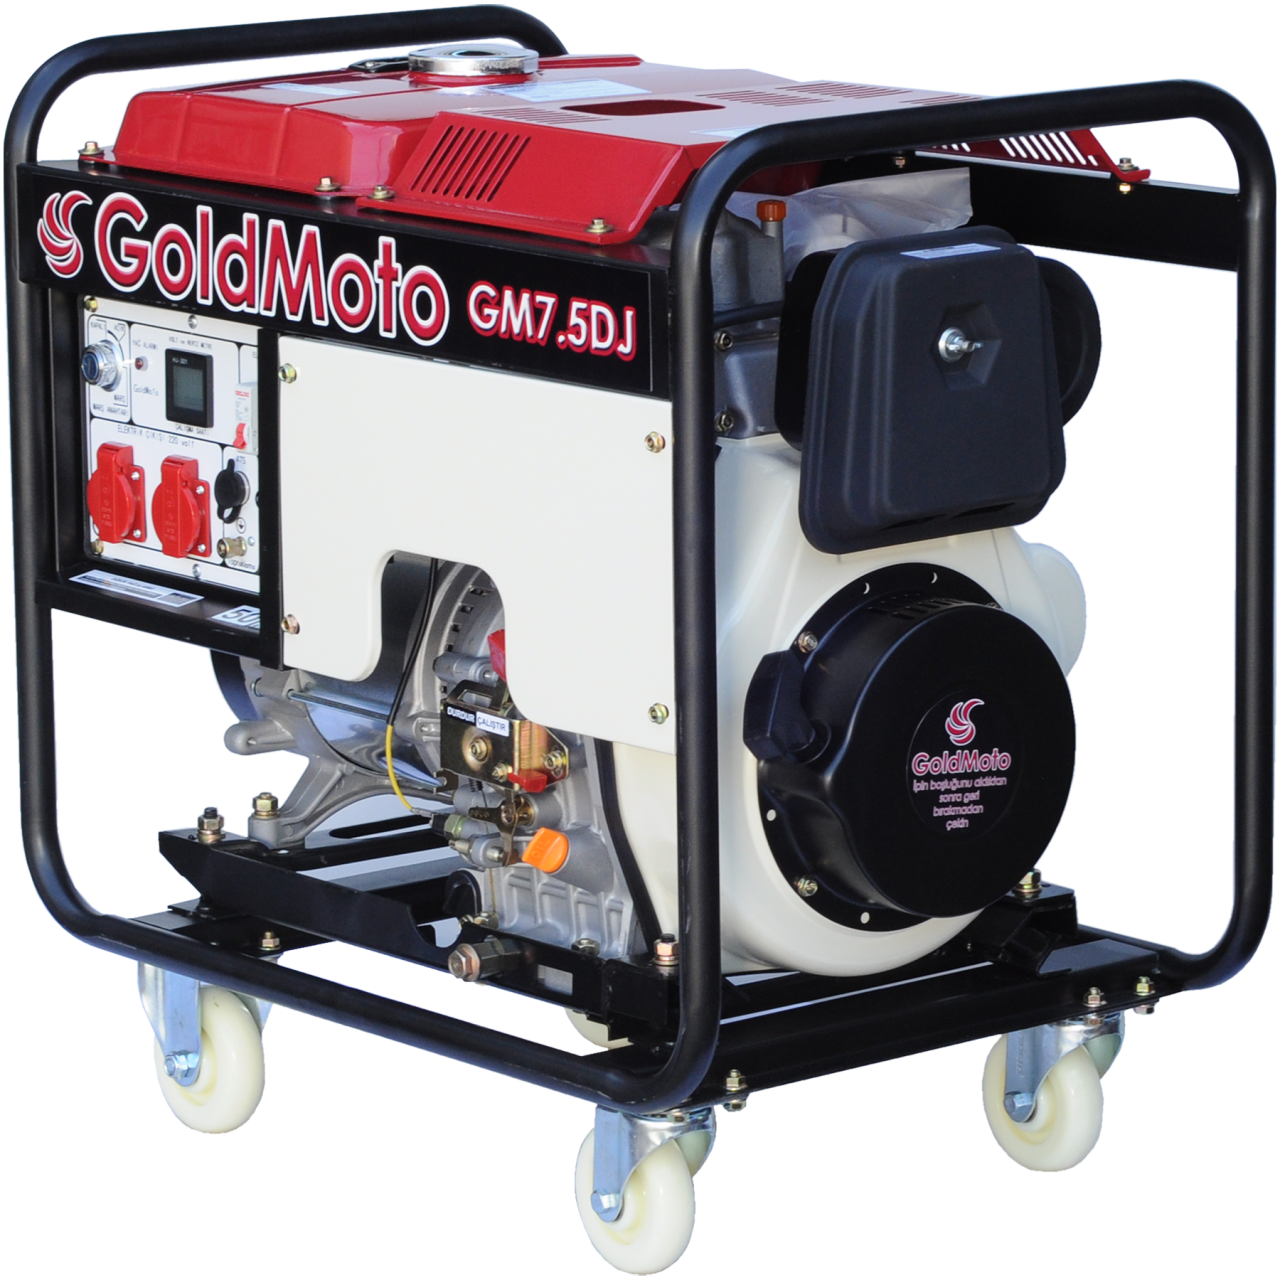 GoldMoto GM7.5DJ Dizel Jeneratör 6.9kVA Monofaze Marşlı